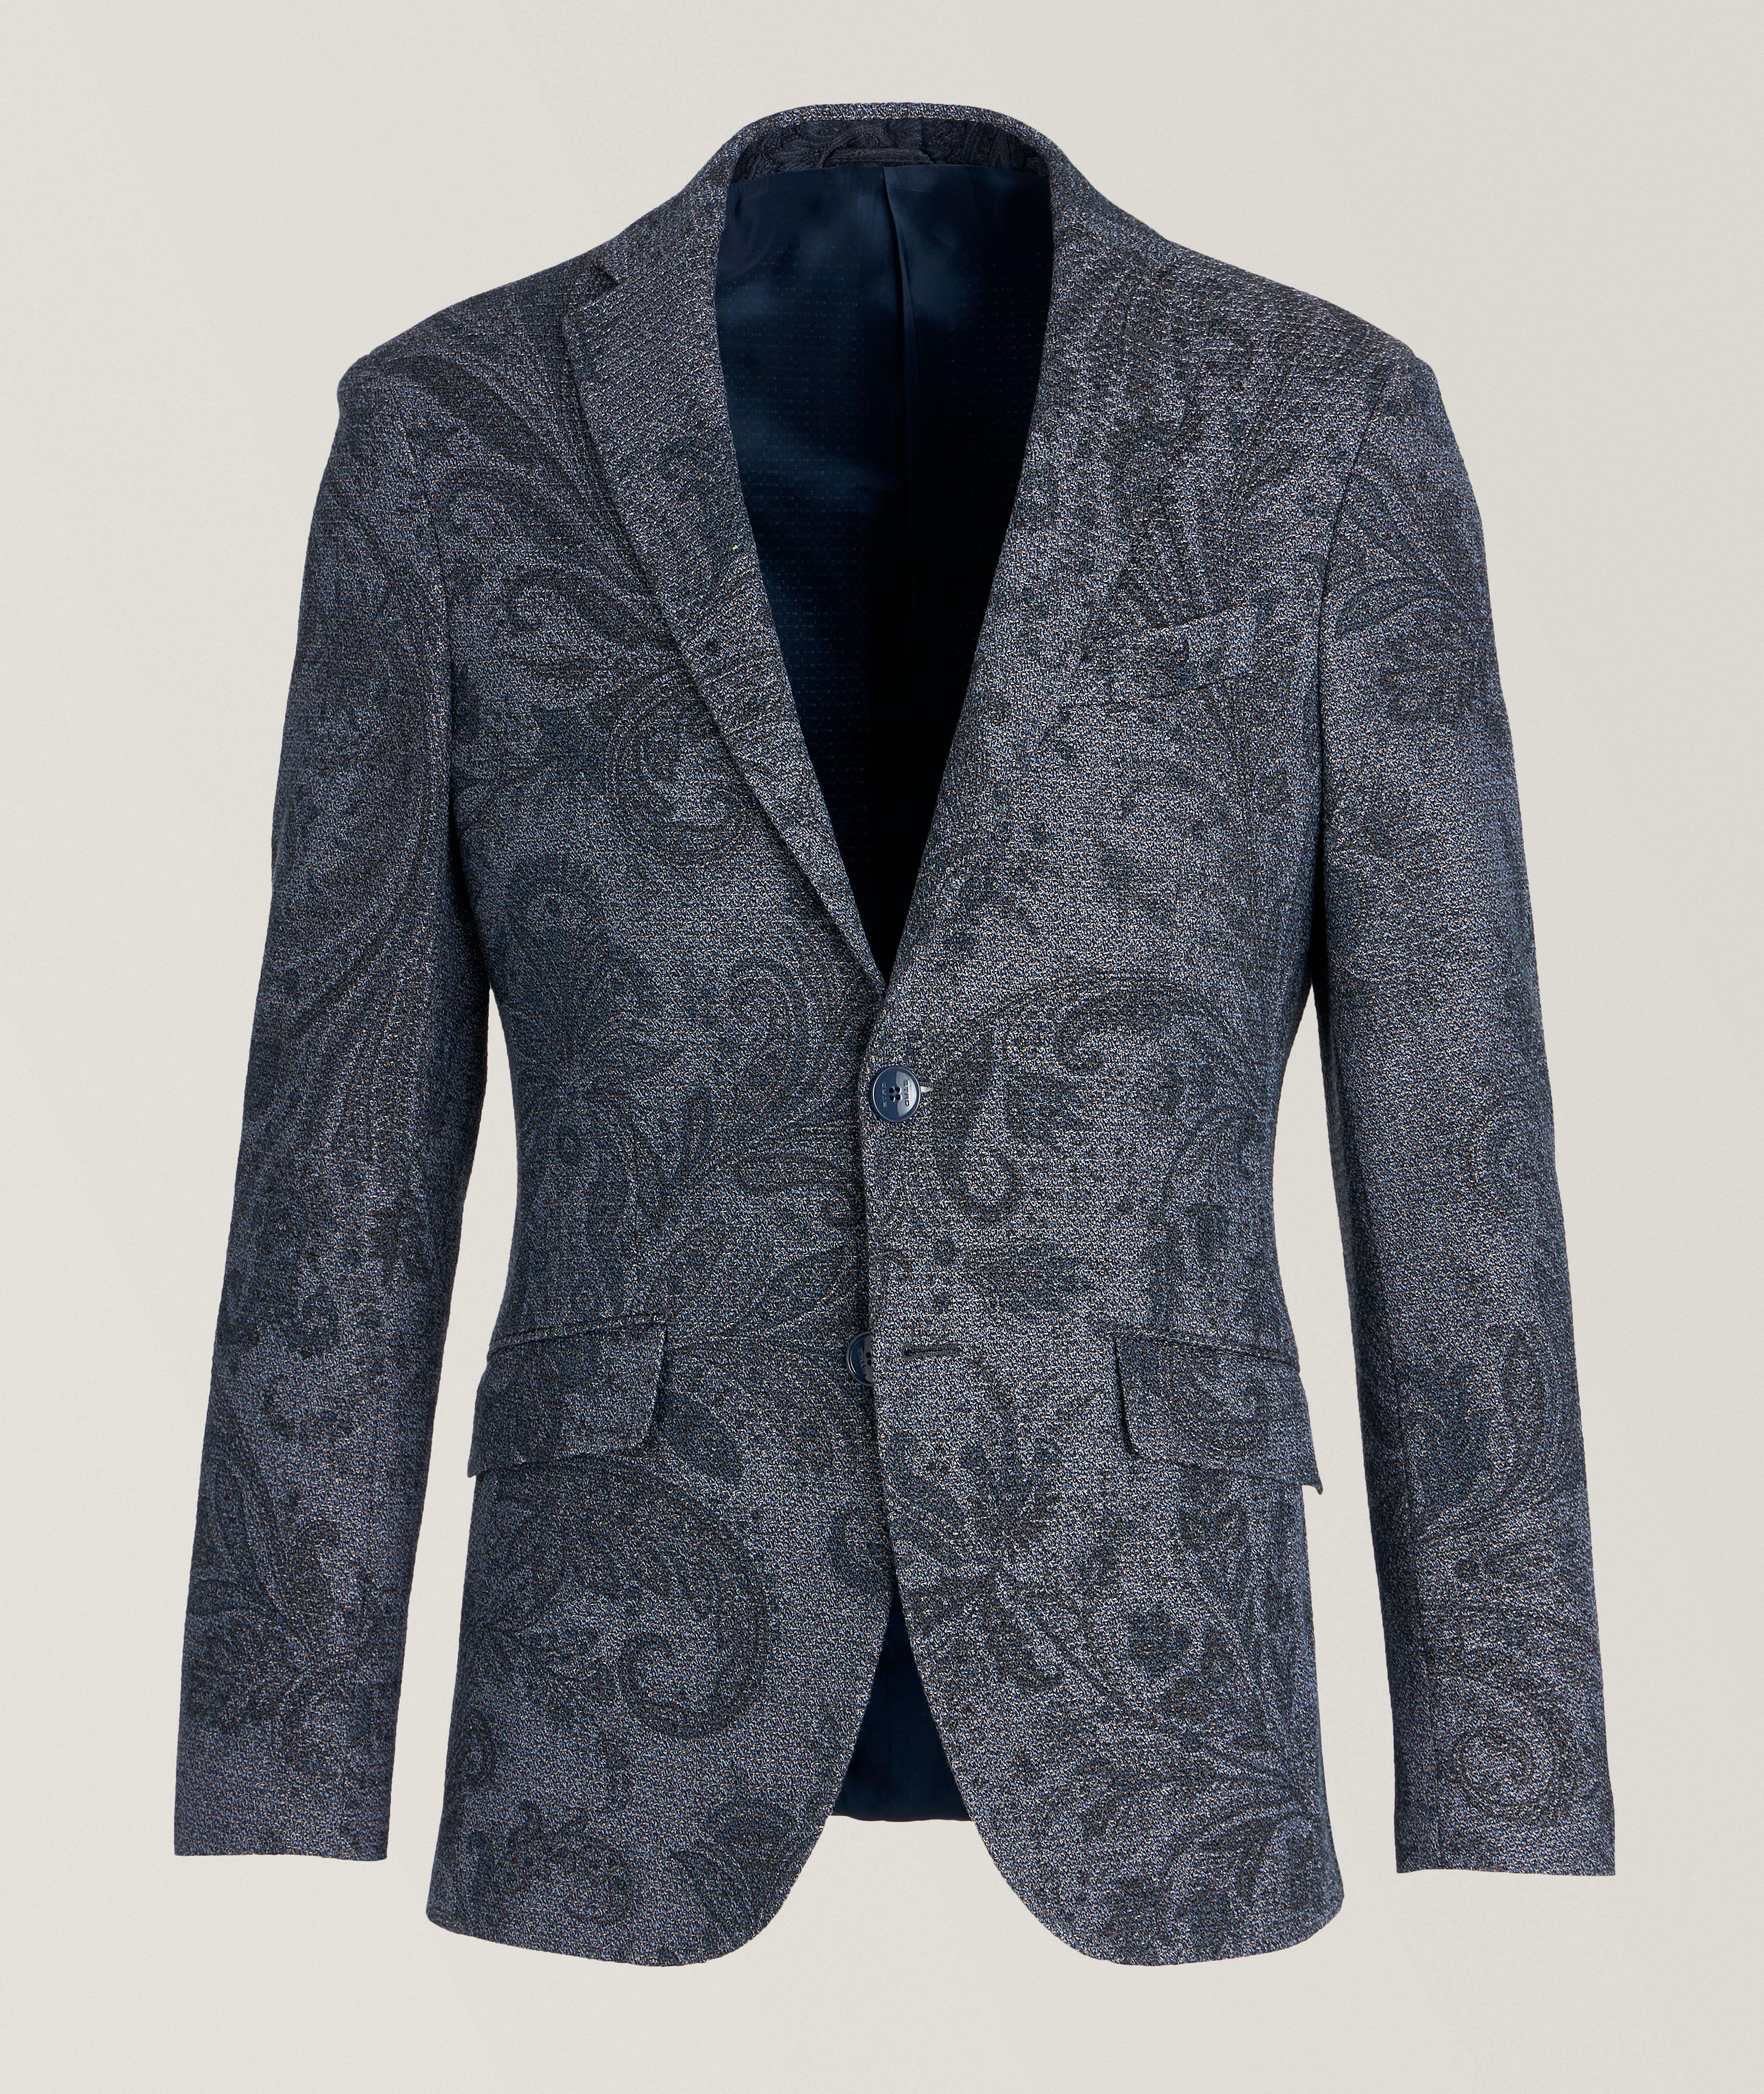 Tonal Textured Paisley Sport Jacket image 0